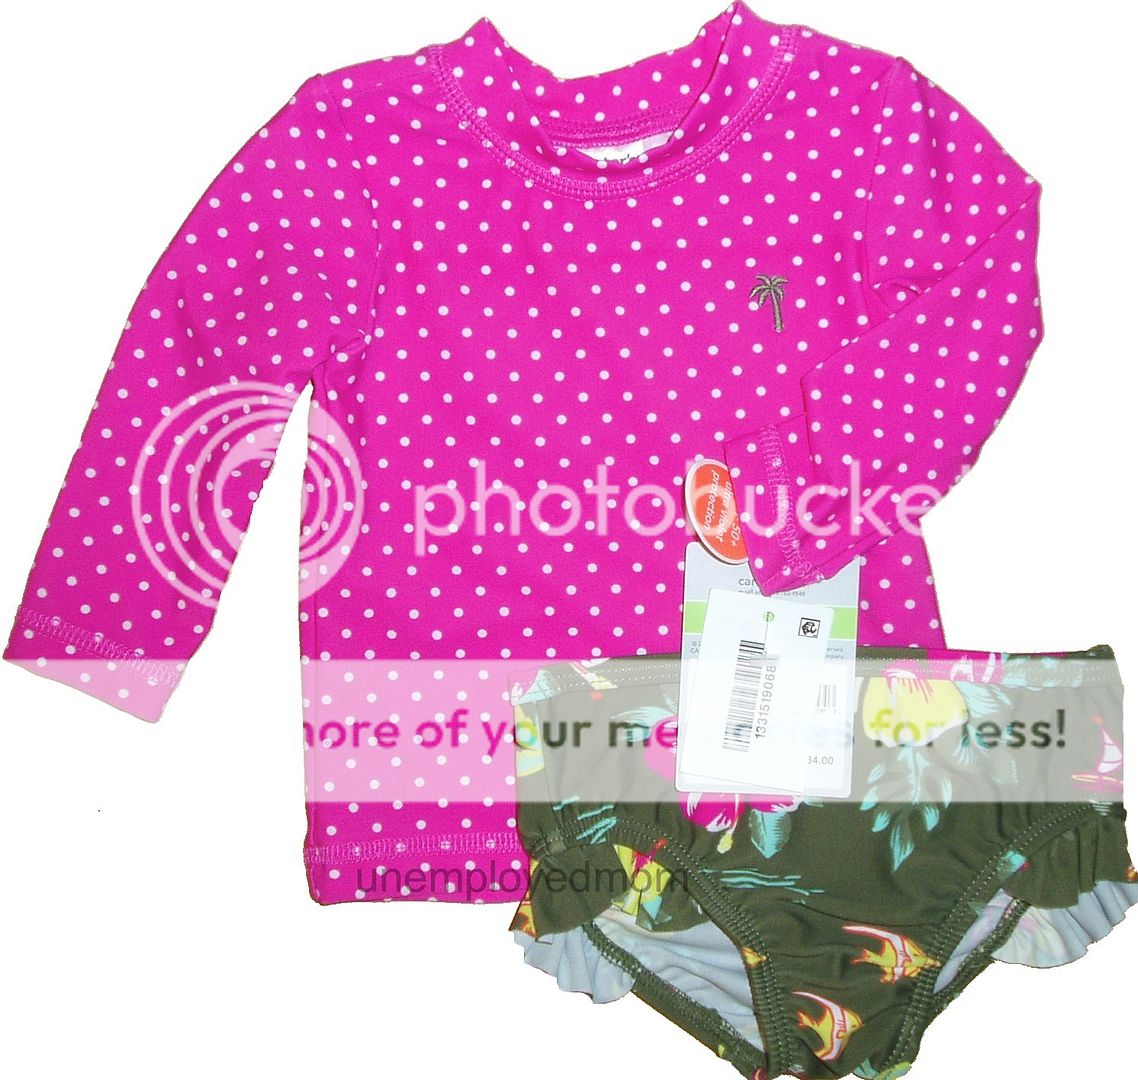  photo 1 Swimsuit Carters Pink Polka Dot Rashguard set 1.jpg